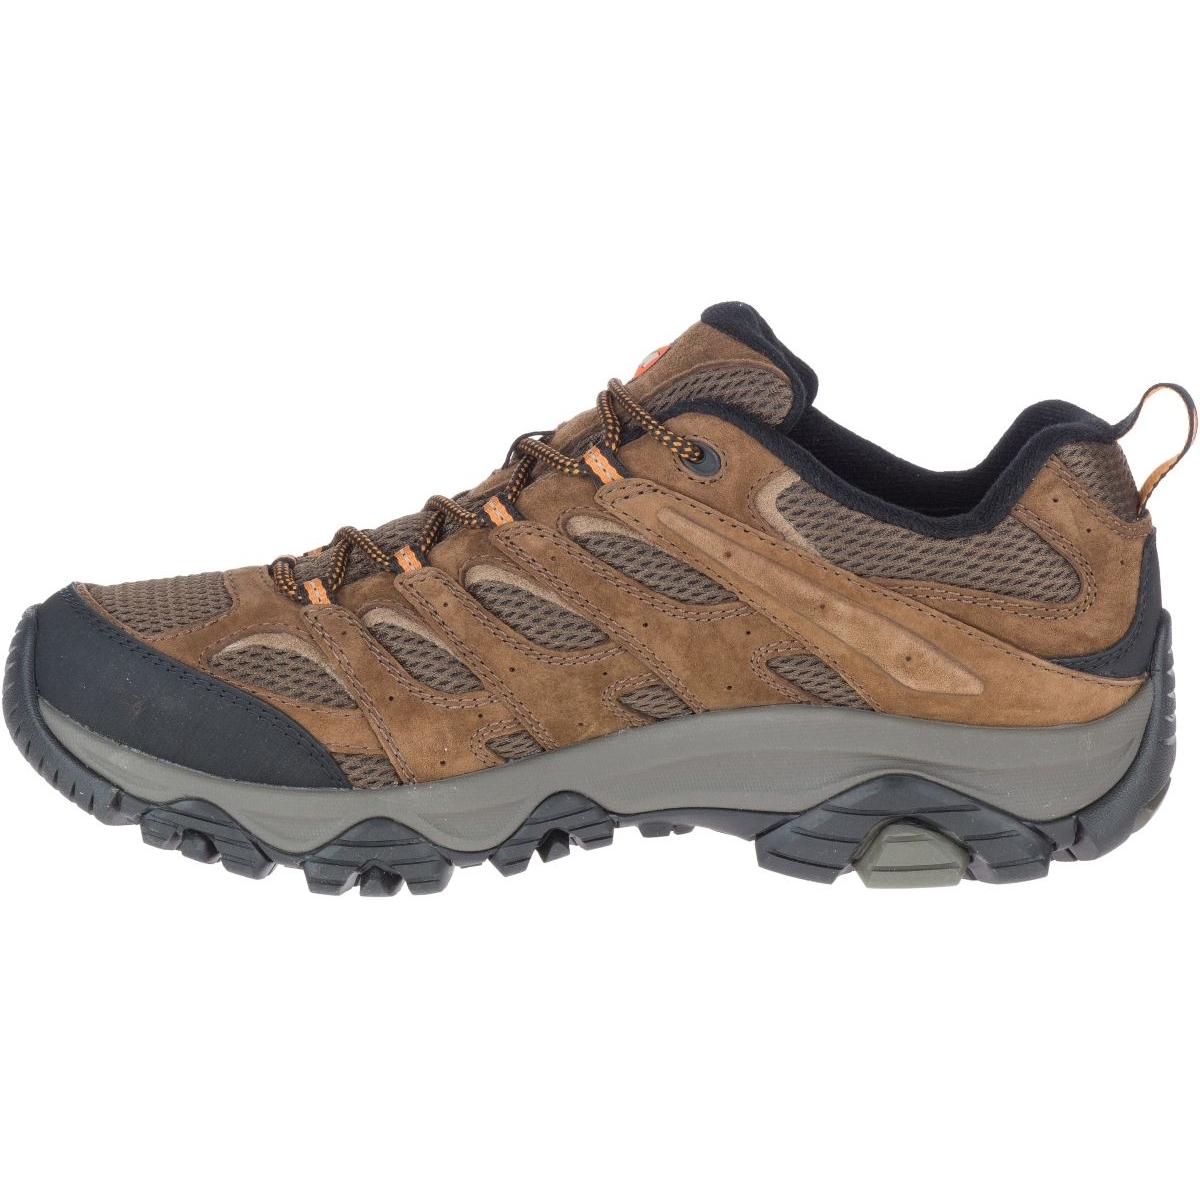 Merrell Men's Moab 3 GORE-TEX Hiking Shoe Earth - J036257 EARTH - Brown, 9